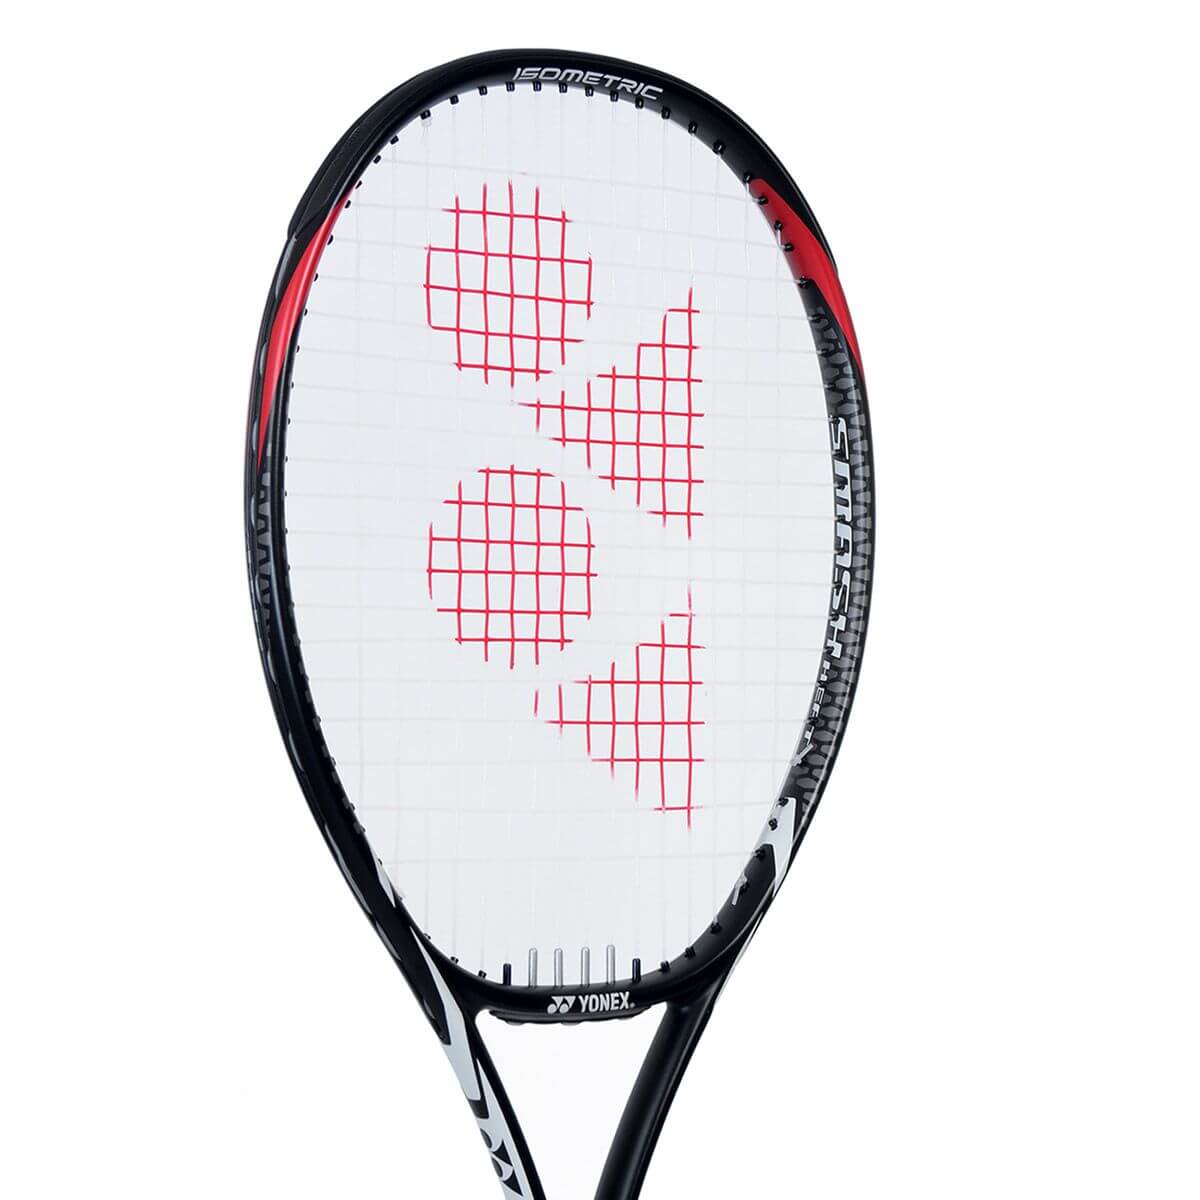 Yonex Smash Heat Strung Tennis Racquet, Black - Best Price online Prokicksports.com